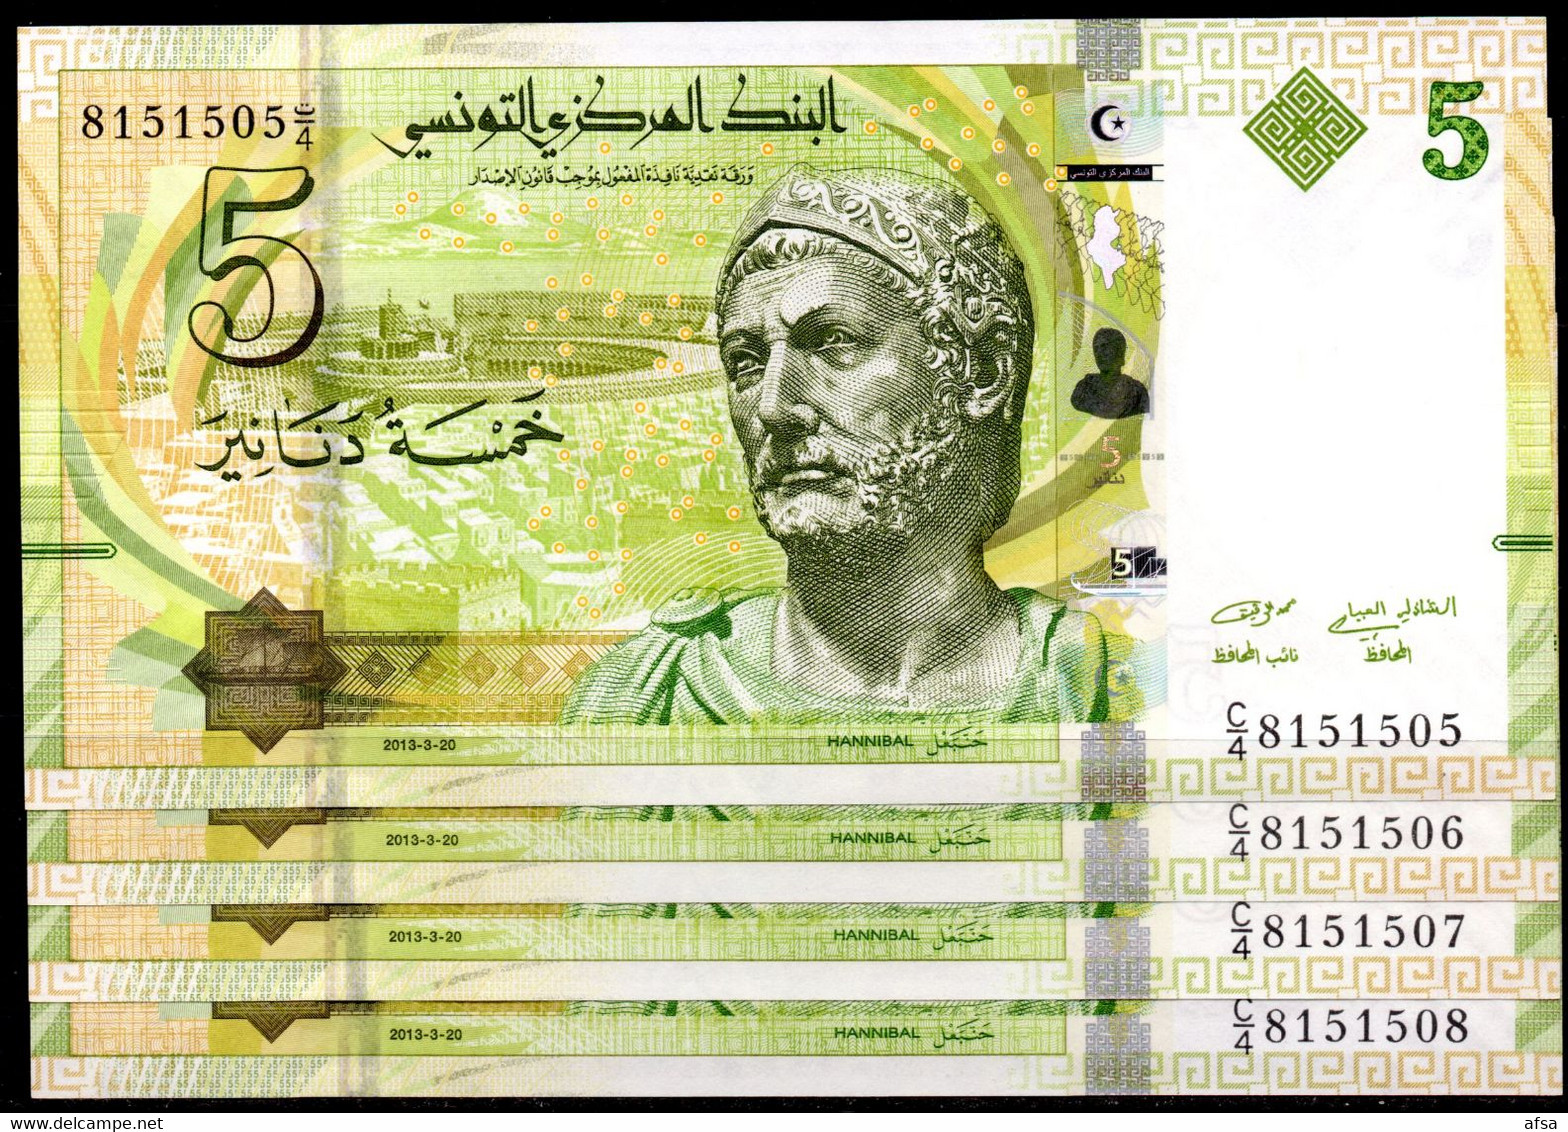 4 Banknotes Of 5 Dinars Type 2013 UNC-consecutive N°//4 Billets De 5 Dinars Type 2013 Neufs(Envoi Gratuit-Free Shipping) - Tunisie